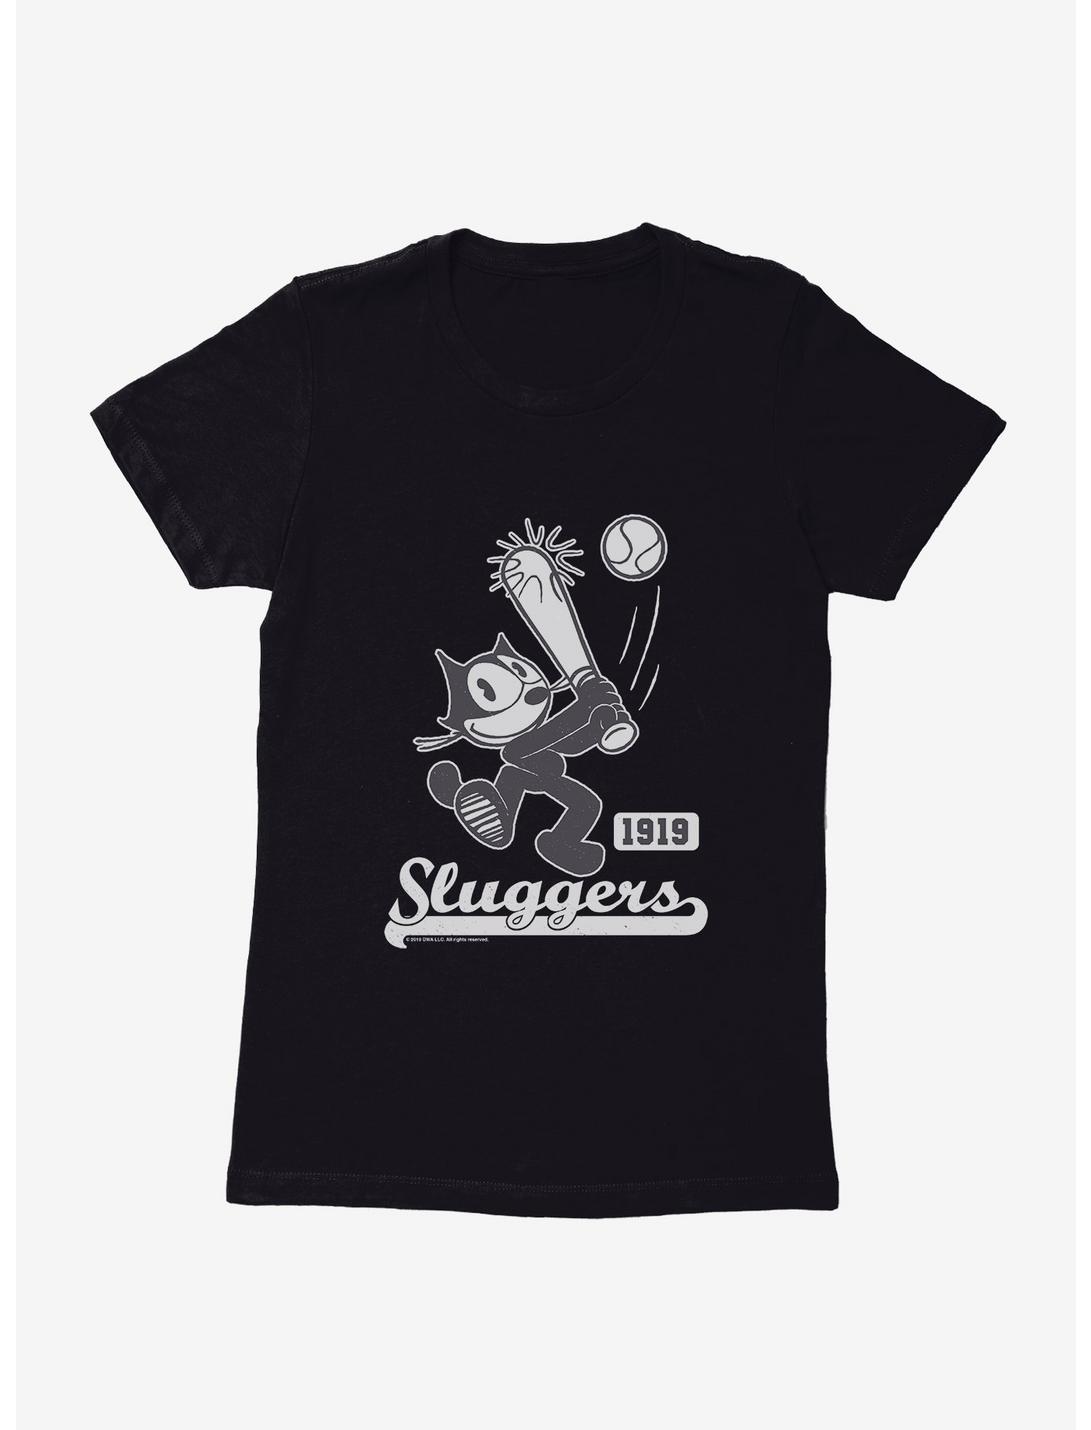 Felix The Cat Sluggers 1919 Baseball Womens T-Shirt, BLACK, hi-res